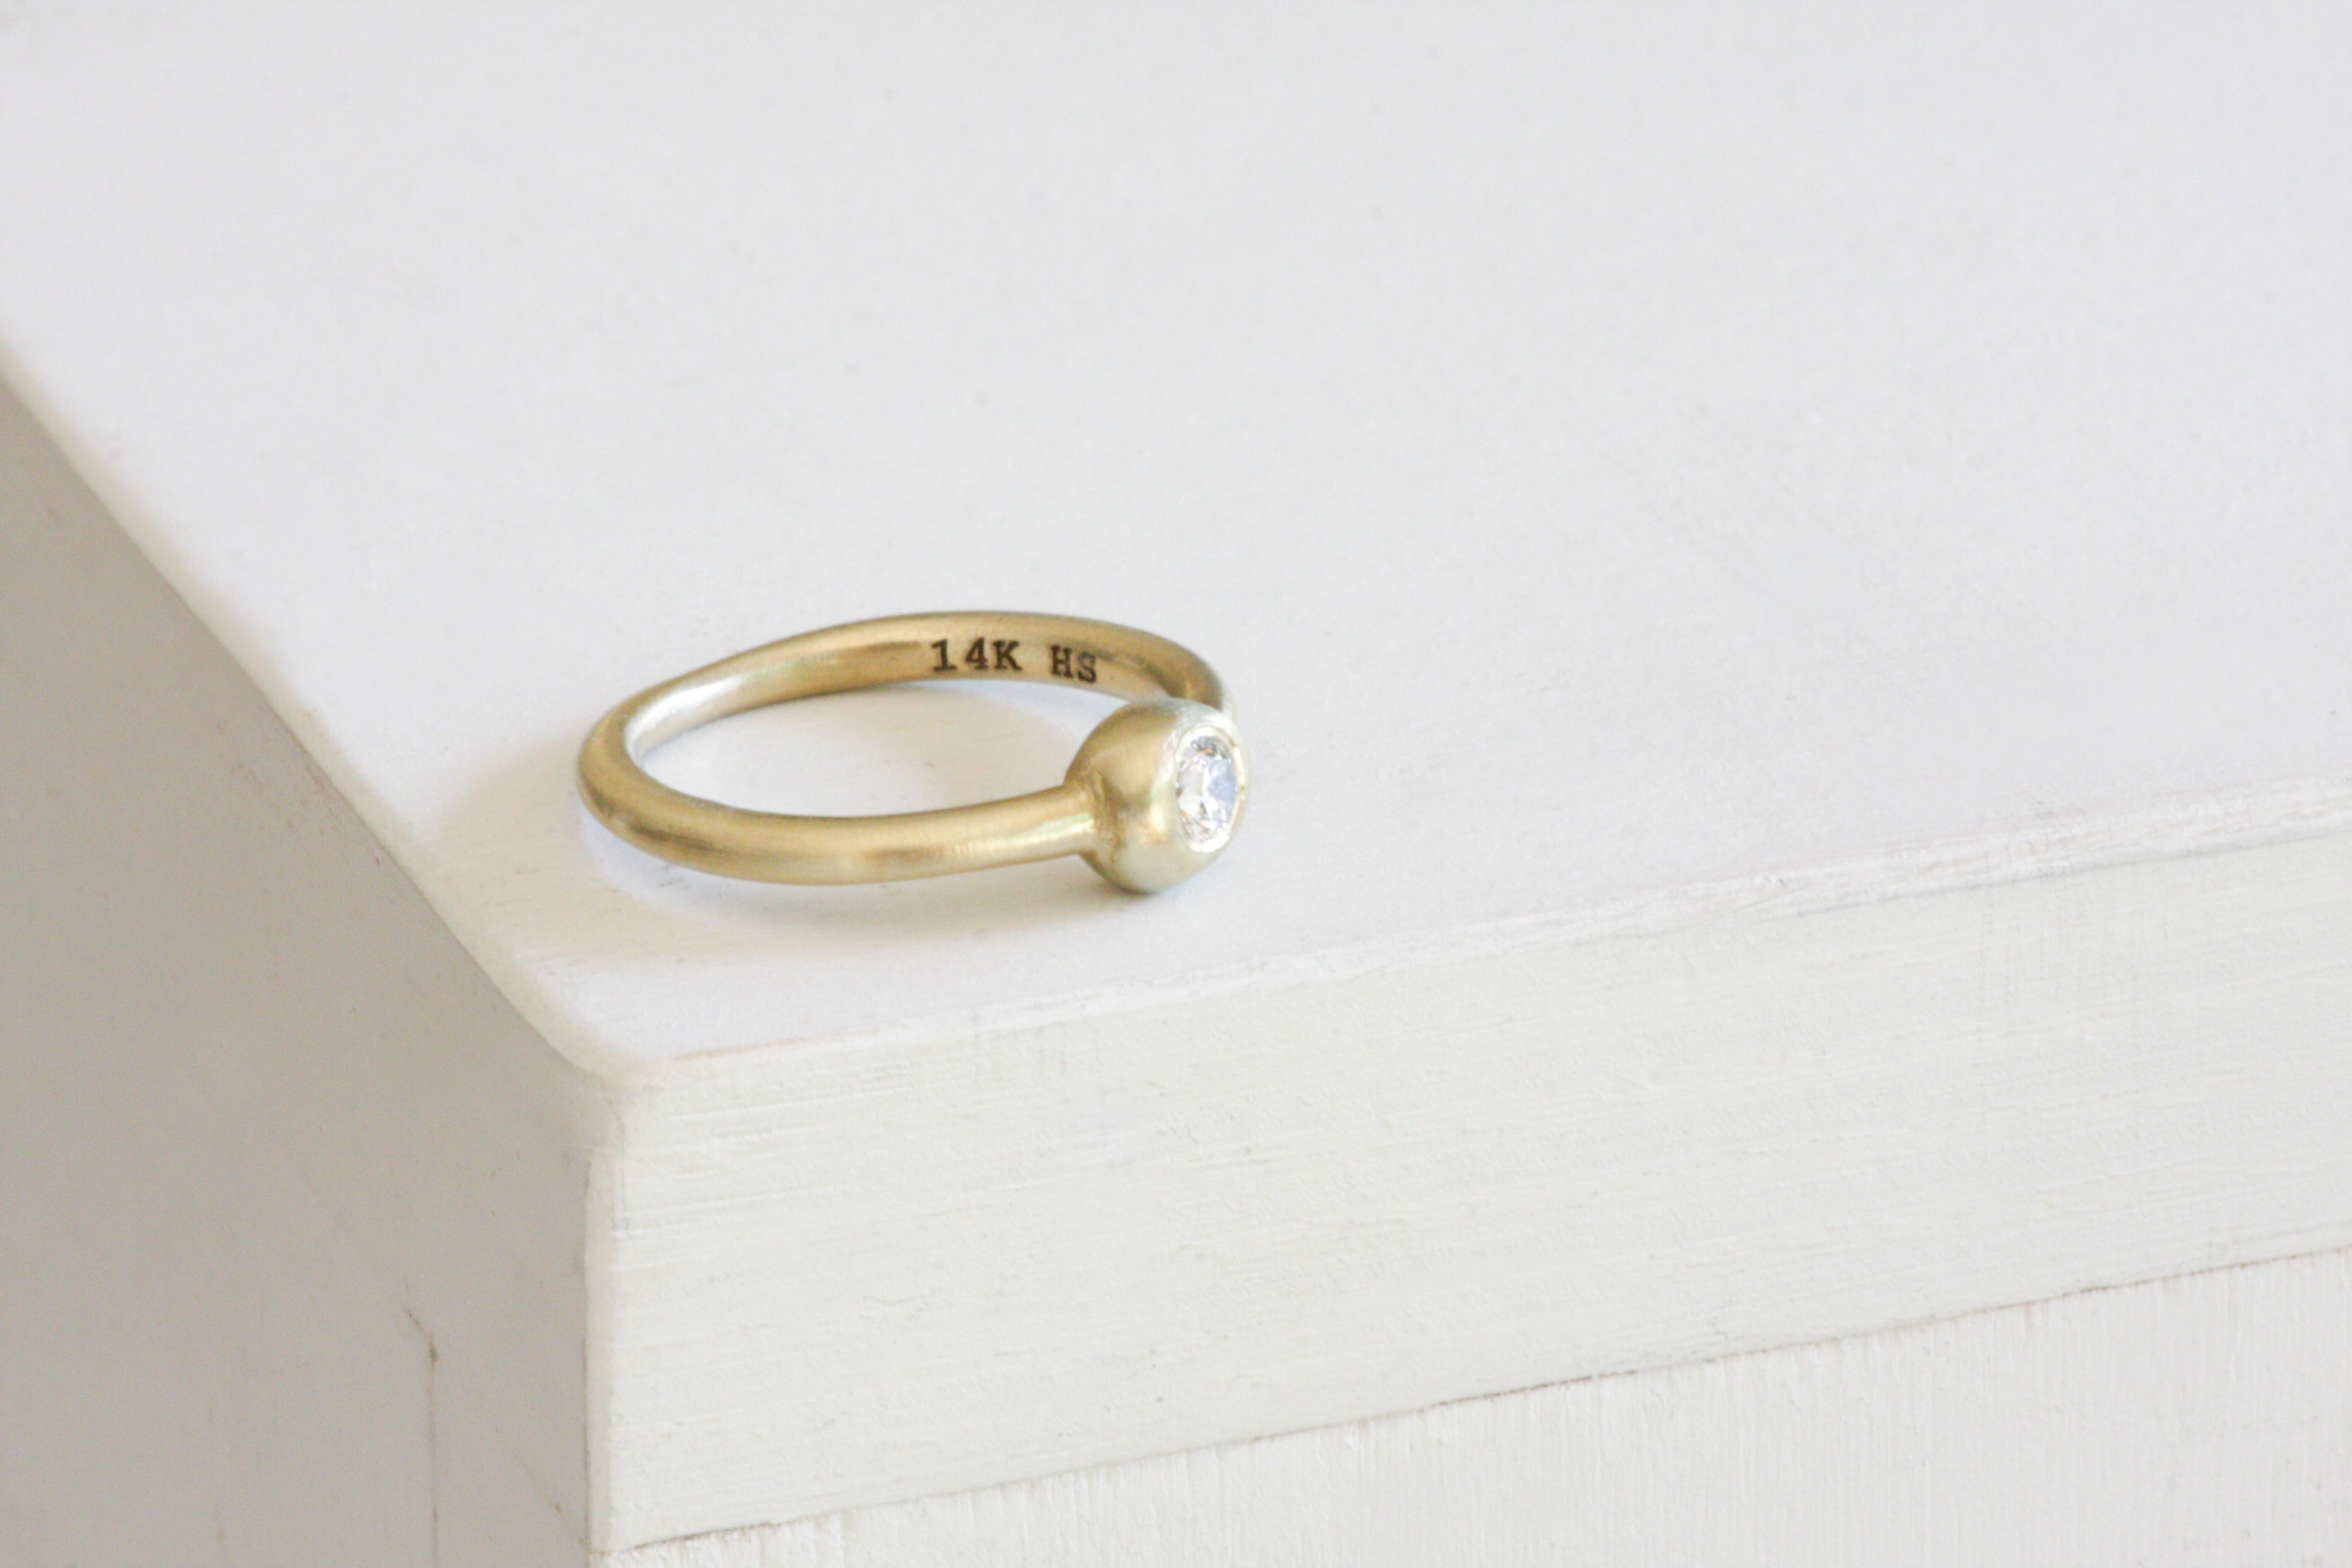 Small "ZOHAR" Ring - Impressive natural solitaire white diamond ring